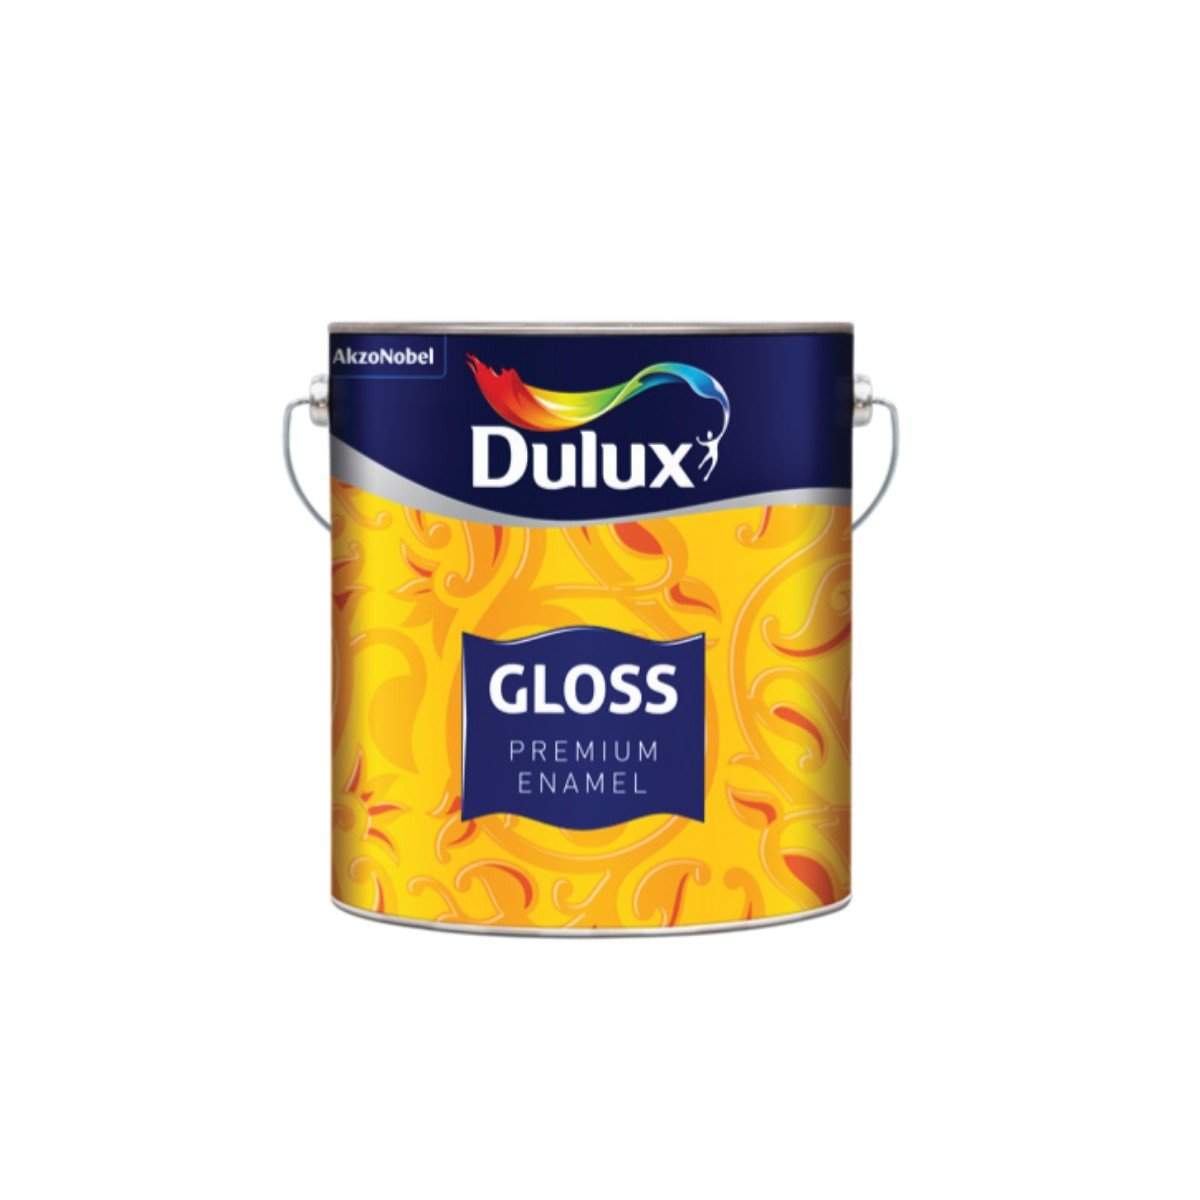 Dulux Gloss Premium Enamel Paint (1Ltr, Lemon Yellow